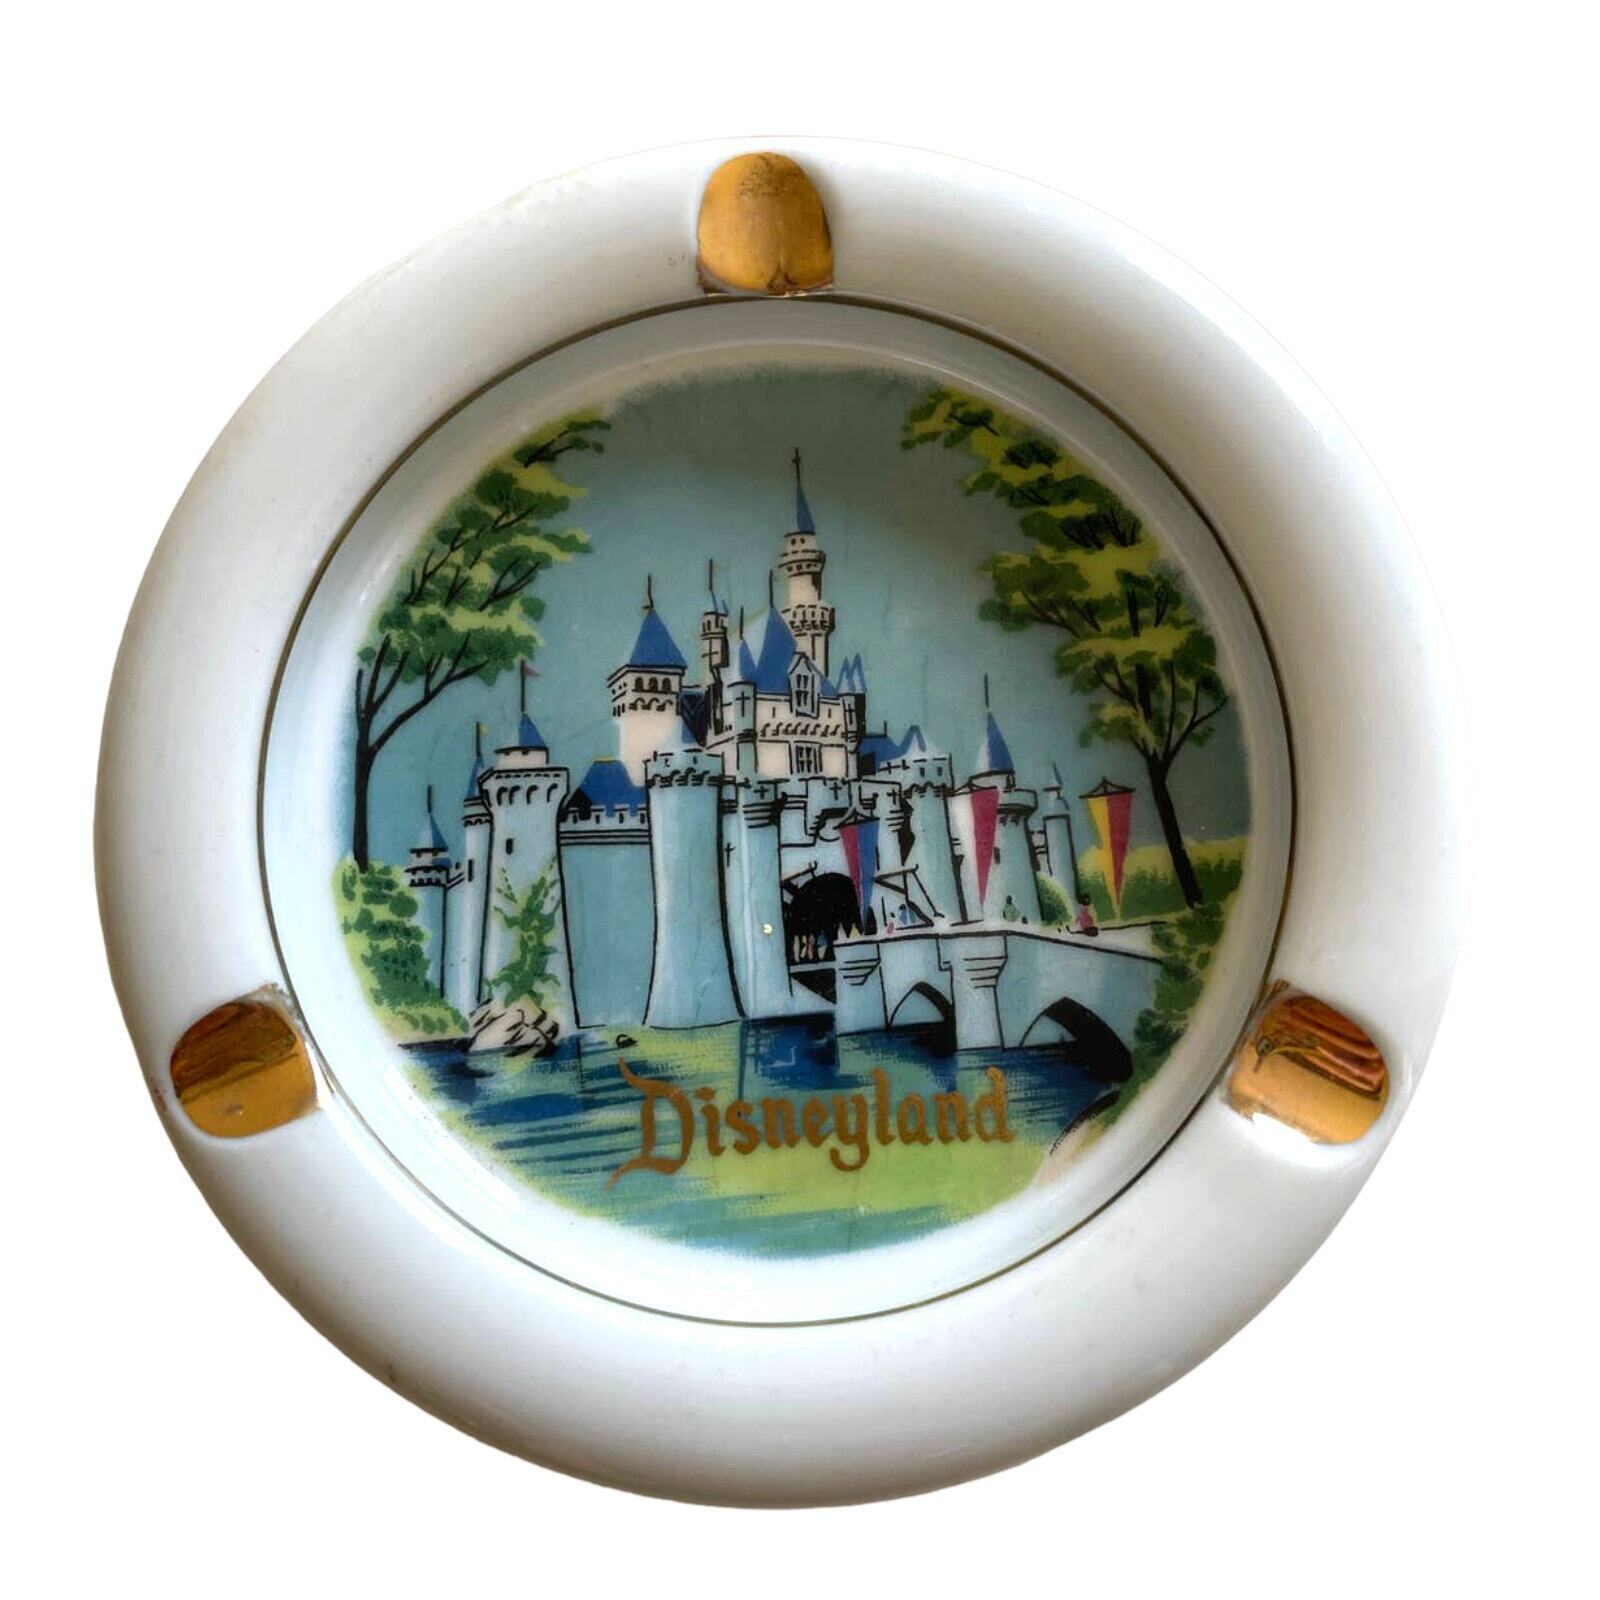 Vintage 1950s/1960s Disneyland Ashtray - Sleeping Beauty's Castle (1959)